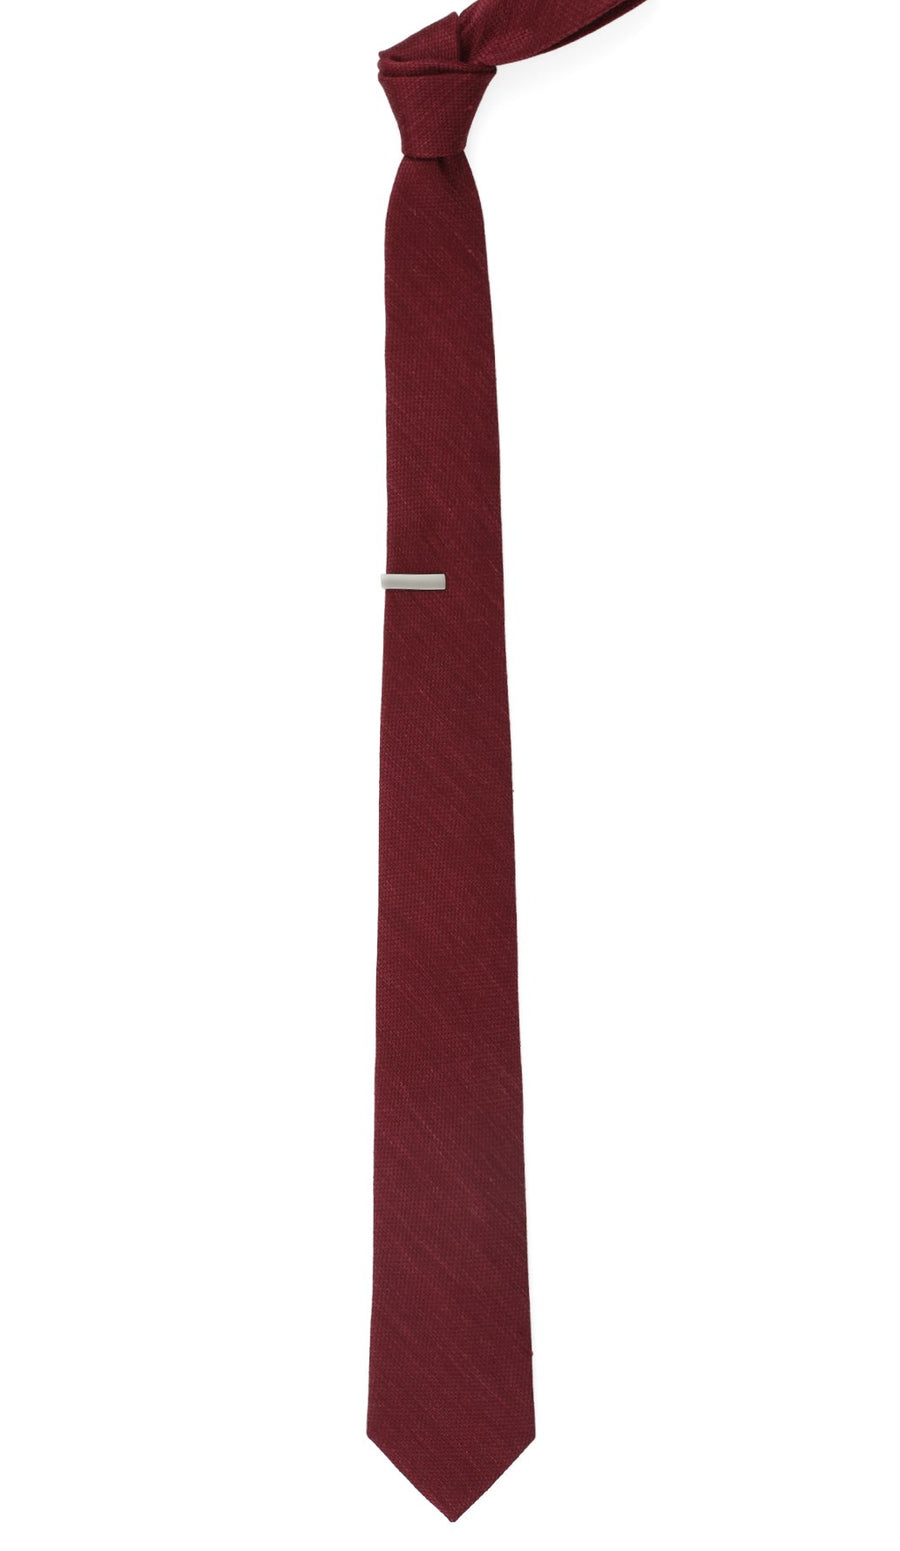 Bhldn Festival Textured Solid Black Cherry Tie | Linen Ties | Tie Bar